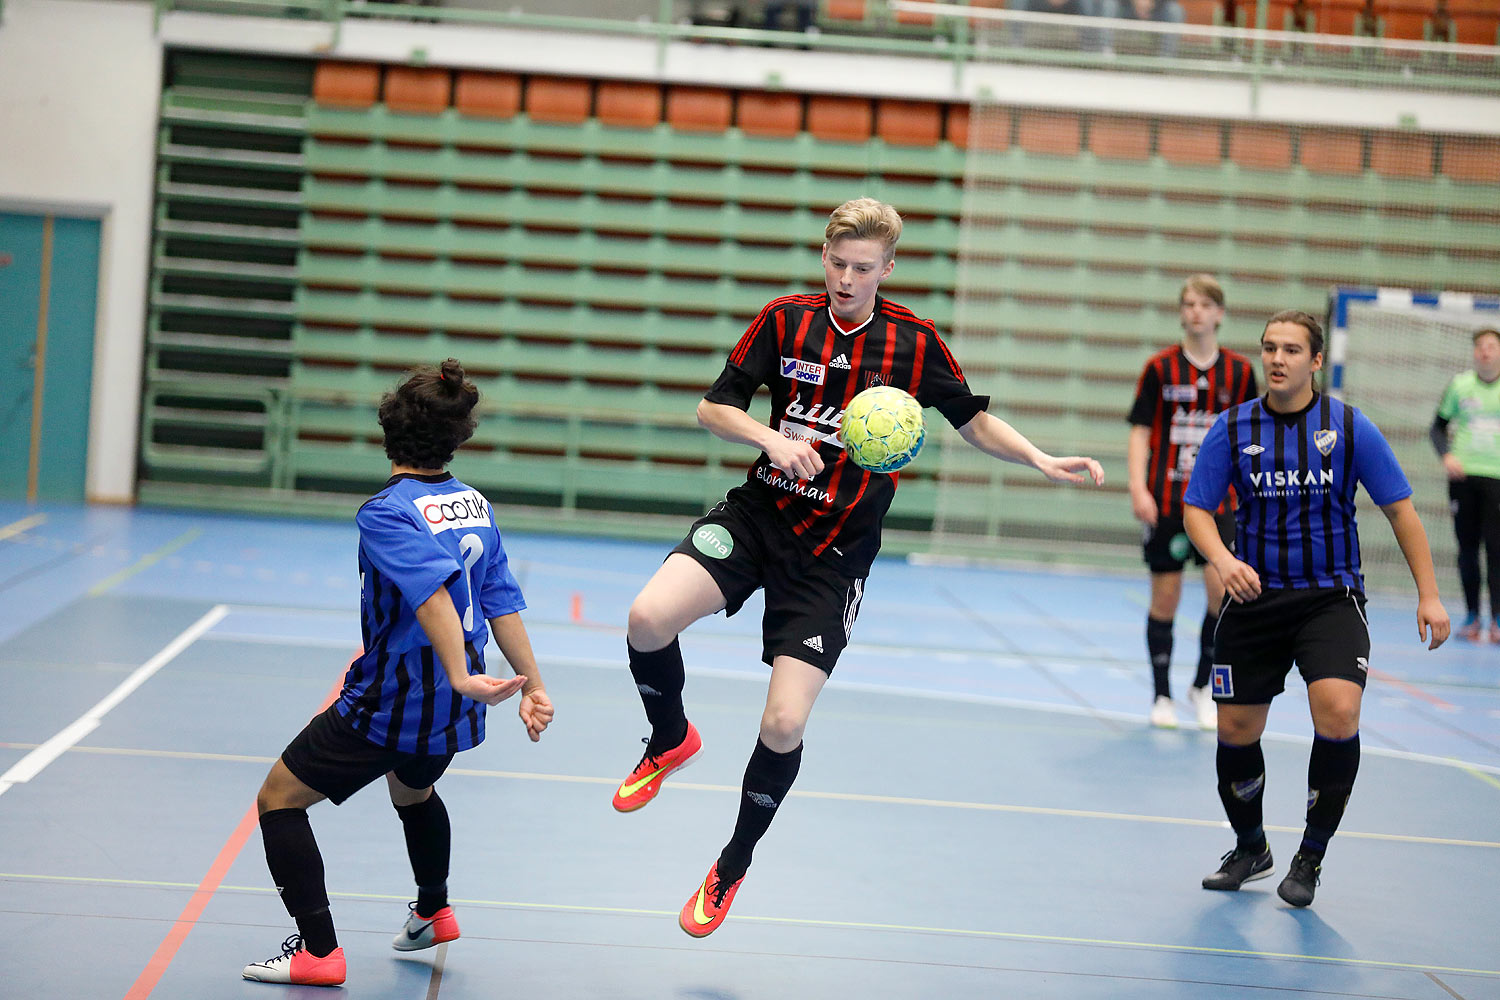 Skövde Futsalcup Herrjuniorer Ulricehamns IFK-Ulvåkers IF,herr,Arena Skövde,Skövde,Sverige,Skövde Futsalcup 2016,Futsal,2016,142684